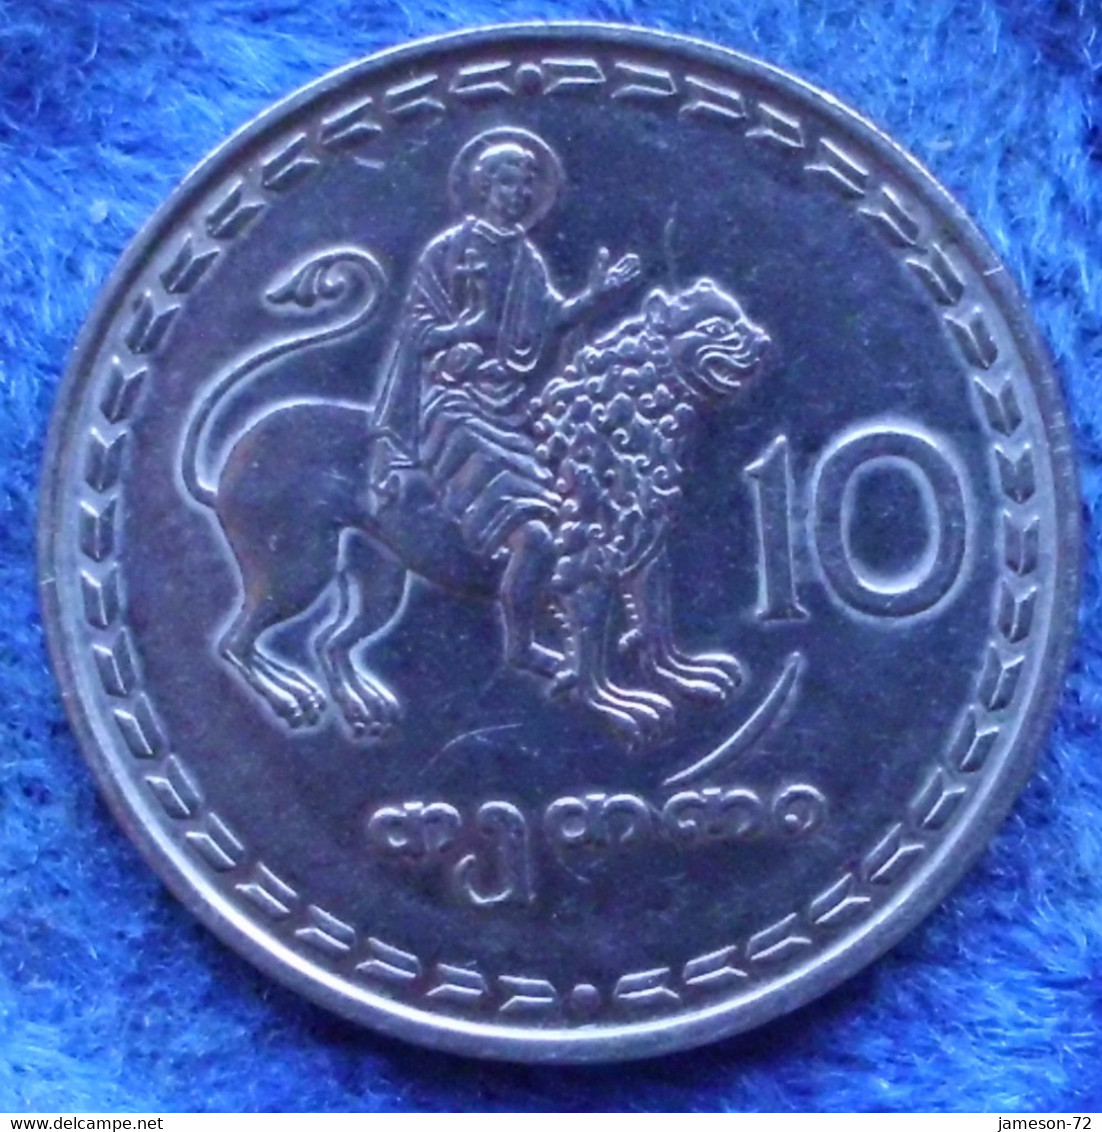 GEORGIA - 10 Thetri 1993 St Mamas KM# 79 Independent Republic Since 1991 - Edelweiss Coins - Georgien